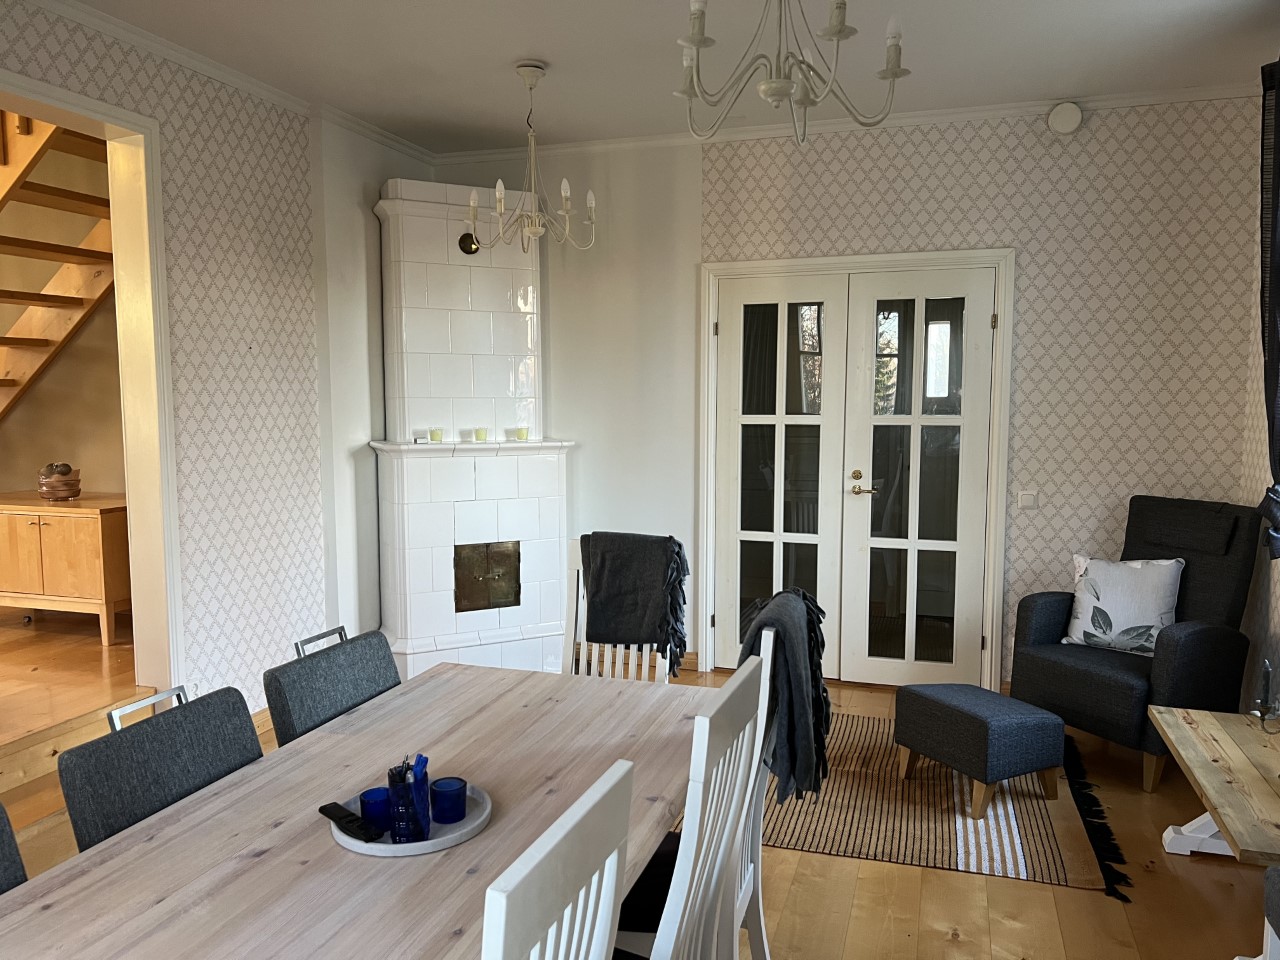 Villa Suntinhovi has a cosy livingroom with a white coloured fireplace.